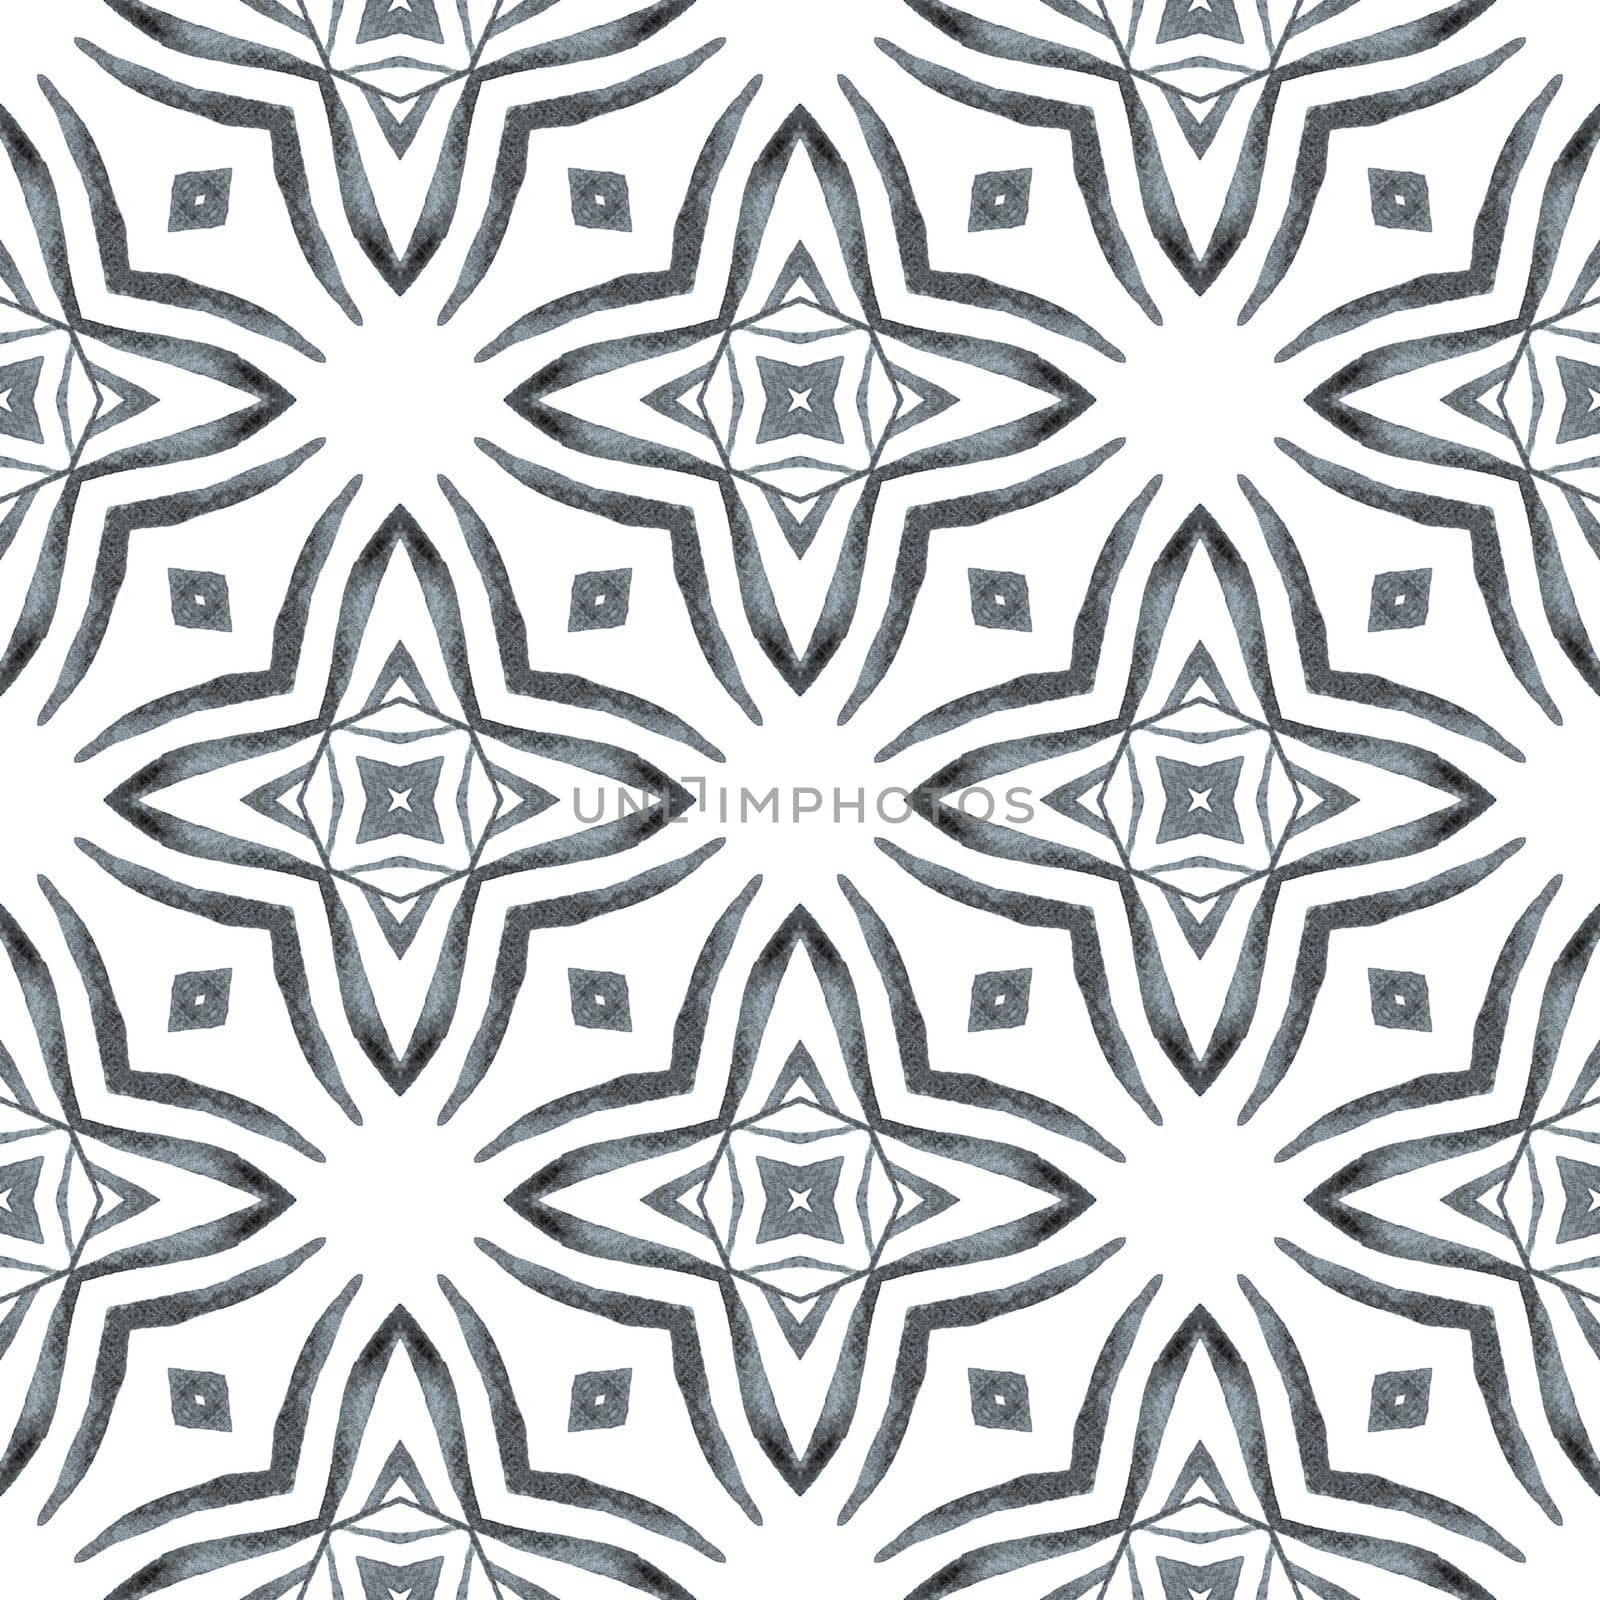 Chevron watercolor pattern. Black and white adorable boho chic summer design. Textile ready popular print, swimwear fabric, wallpaper, wrapping. Green geometric chevron watercolor border.